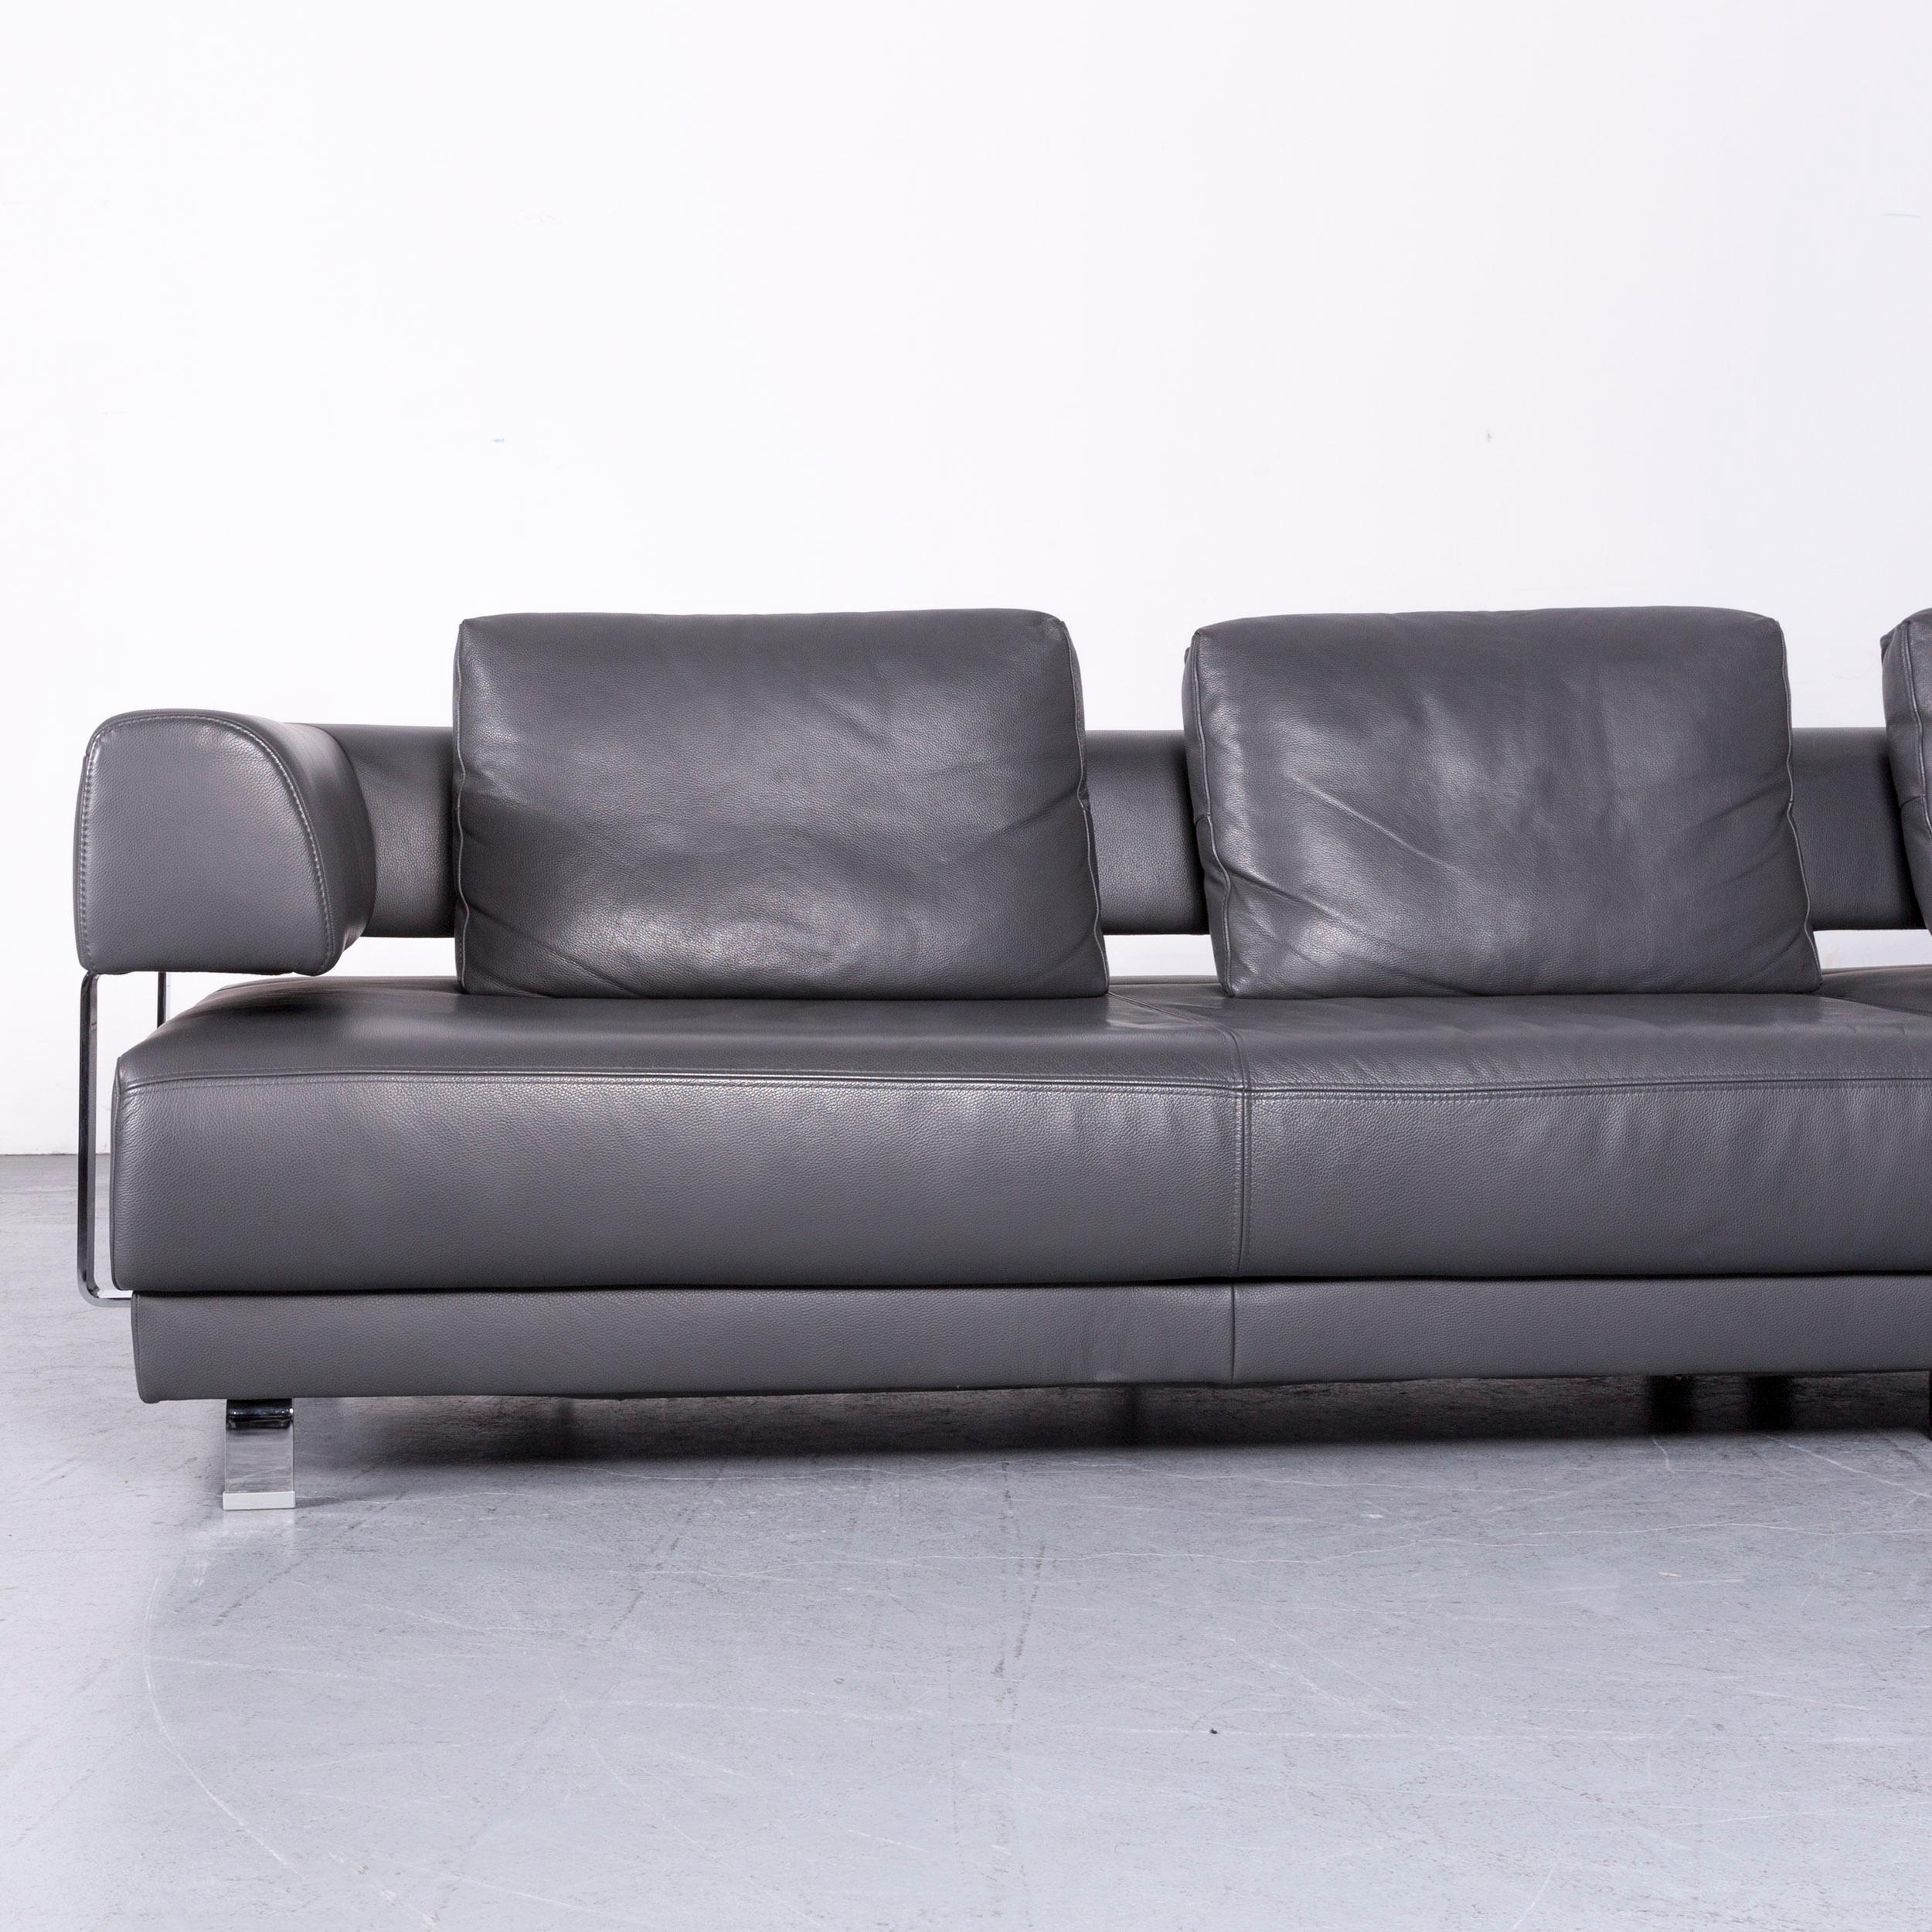 Ewald Schillig Brand Face Designer Sofa Leather Grey Corner Couch In Good Condition For Sale In Cologne, DE